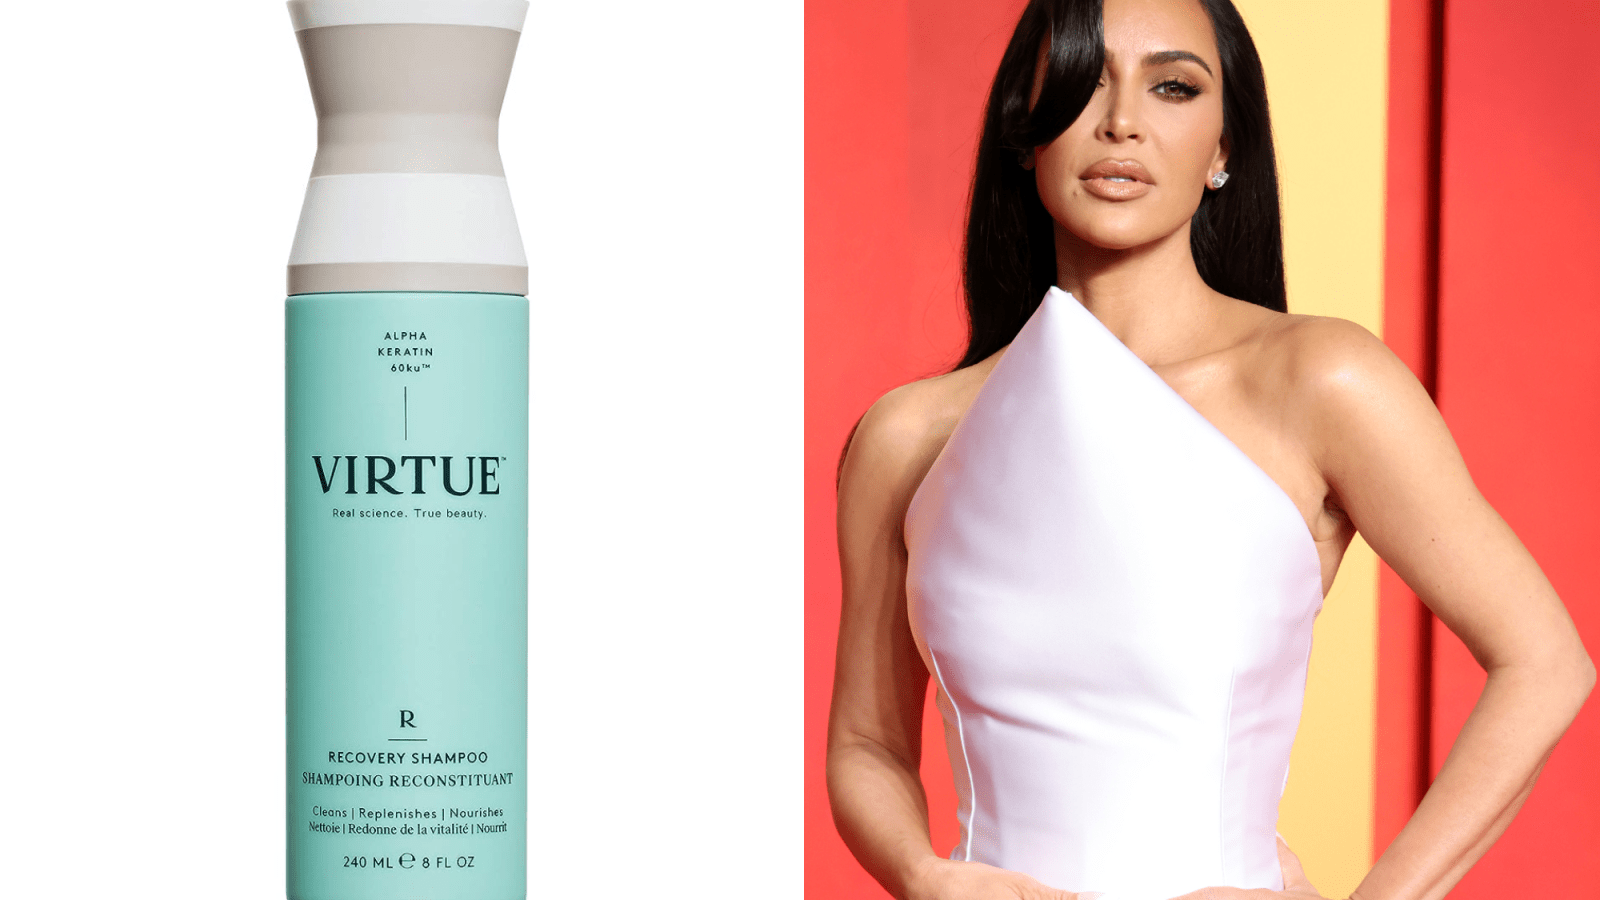 Virtue Recovery Shampoo and Kim Kardashian